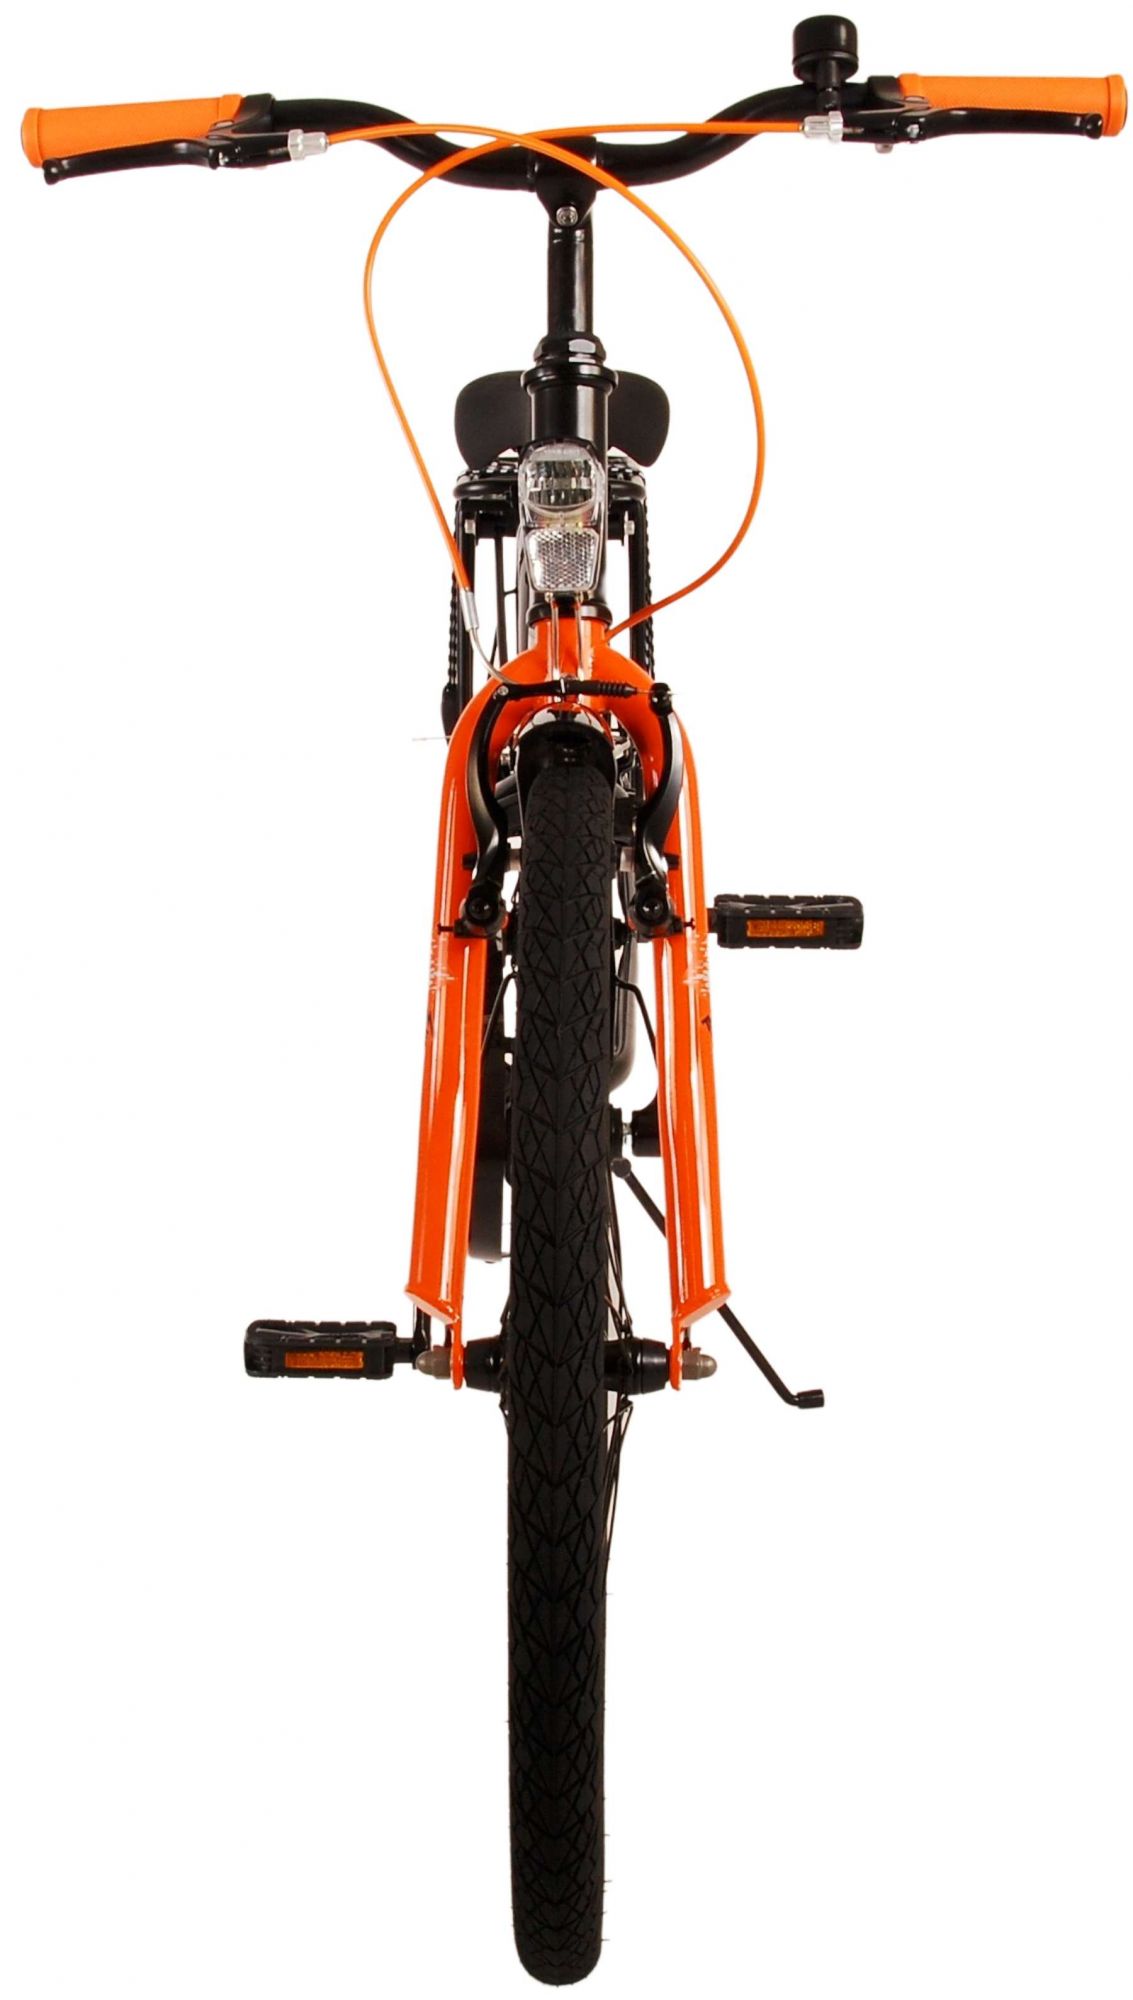 Volare Thombike Kids' bike - Boys - 24 inch - Black Orange - Two